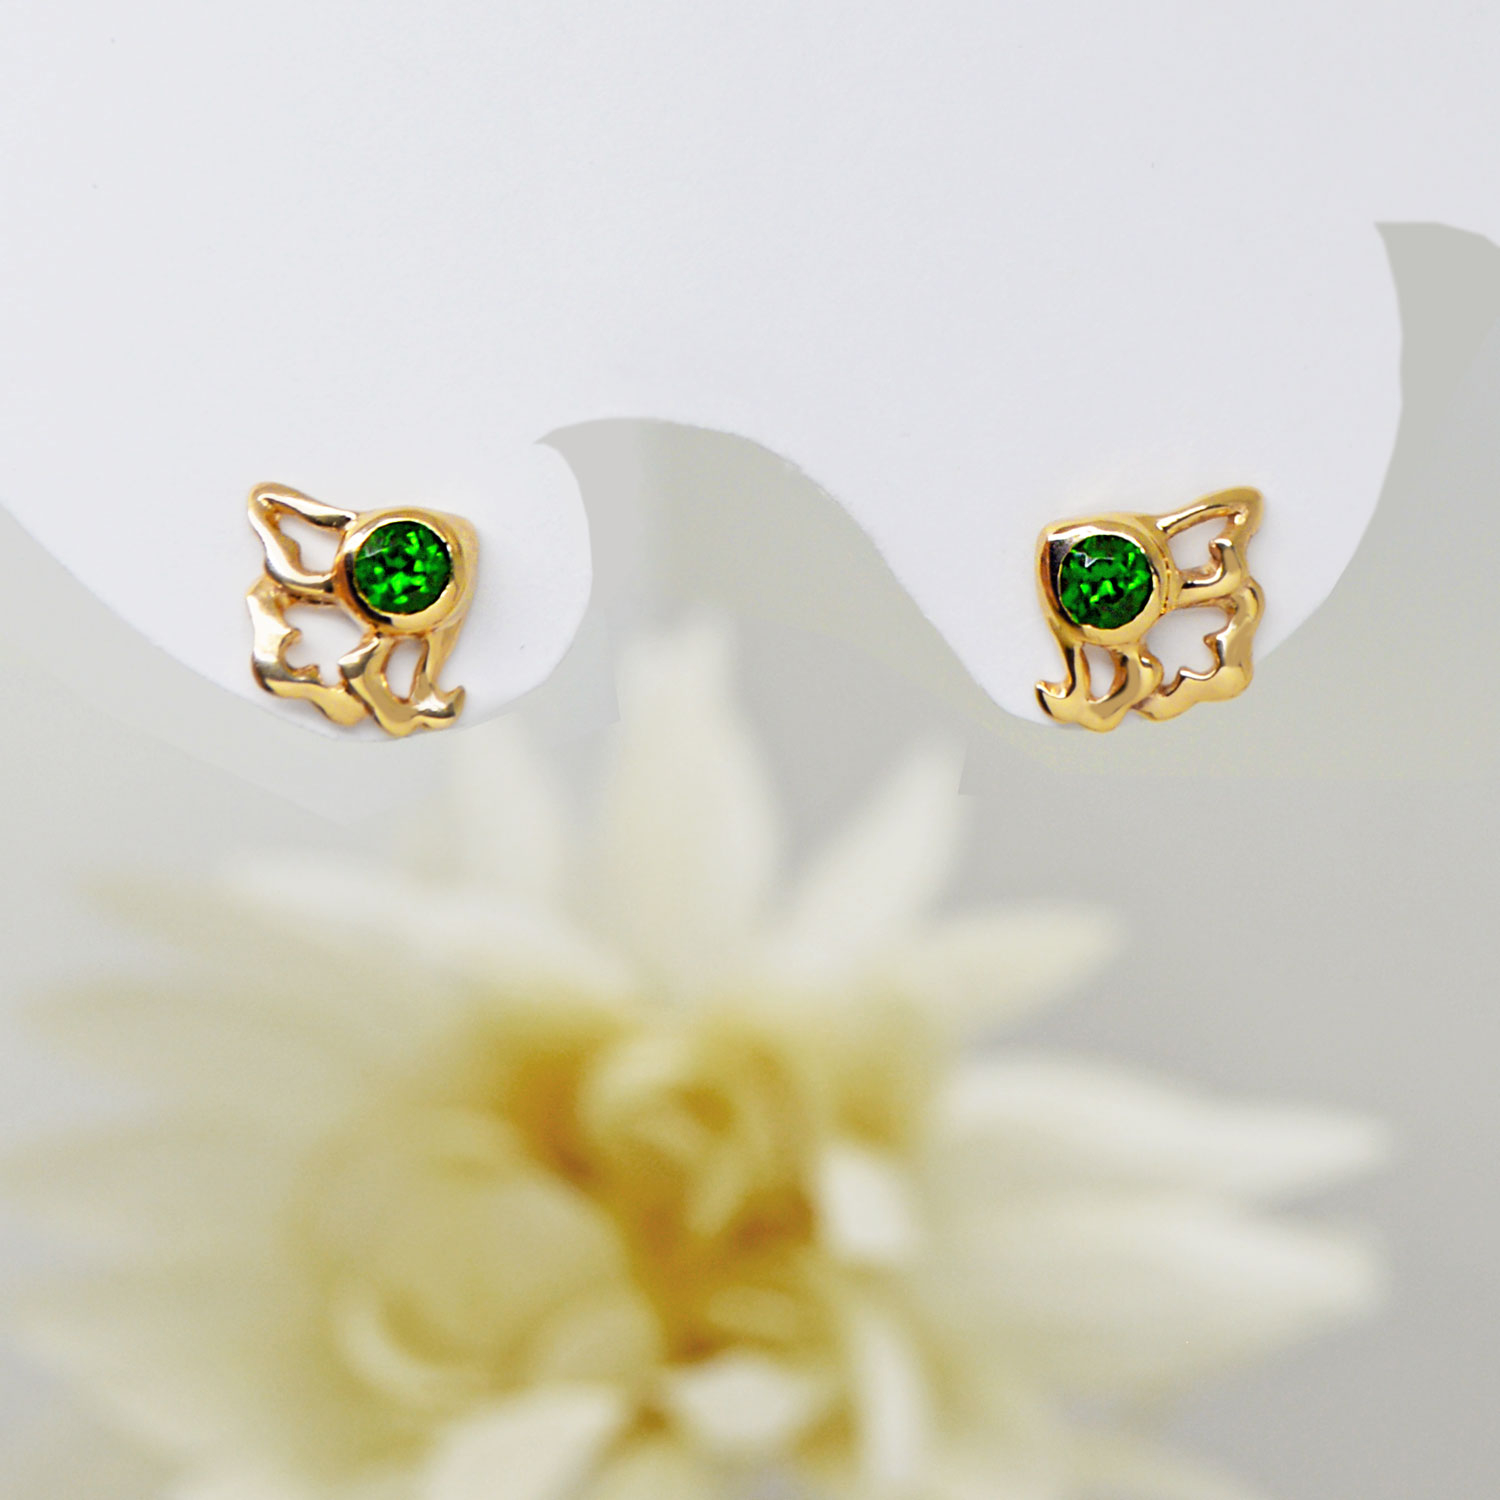 Tsavorite green garnet gemstone stud earrings with floral petal design and bezel settings, custom designed by Morgan's Treasure